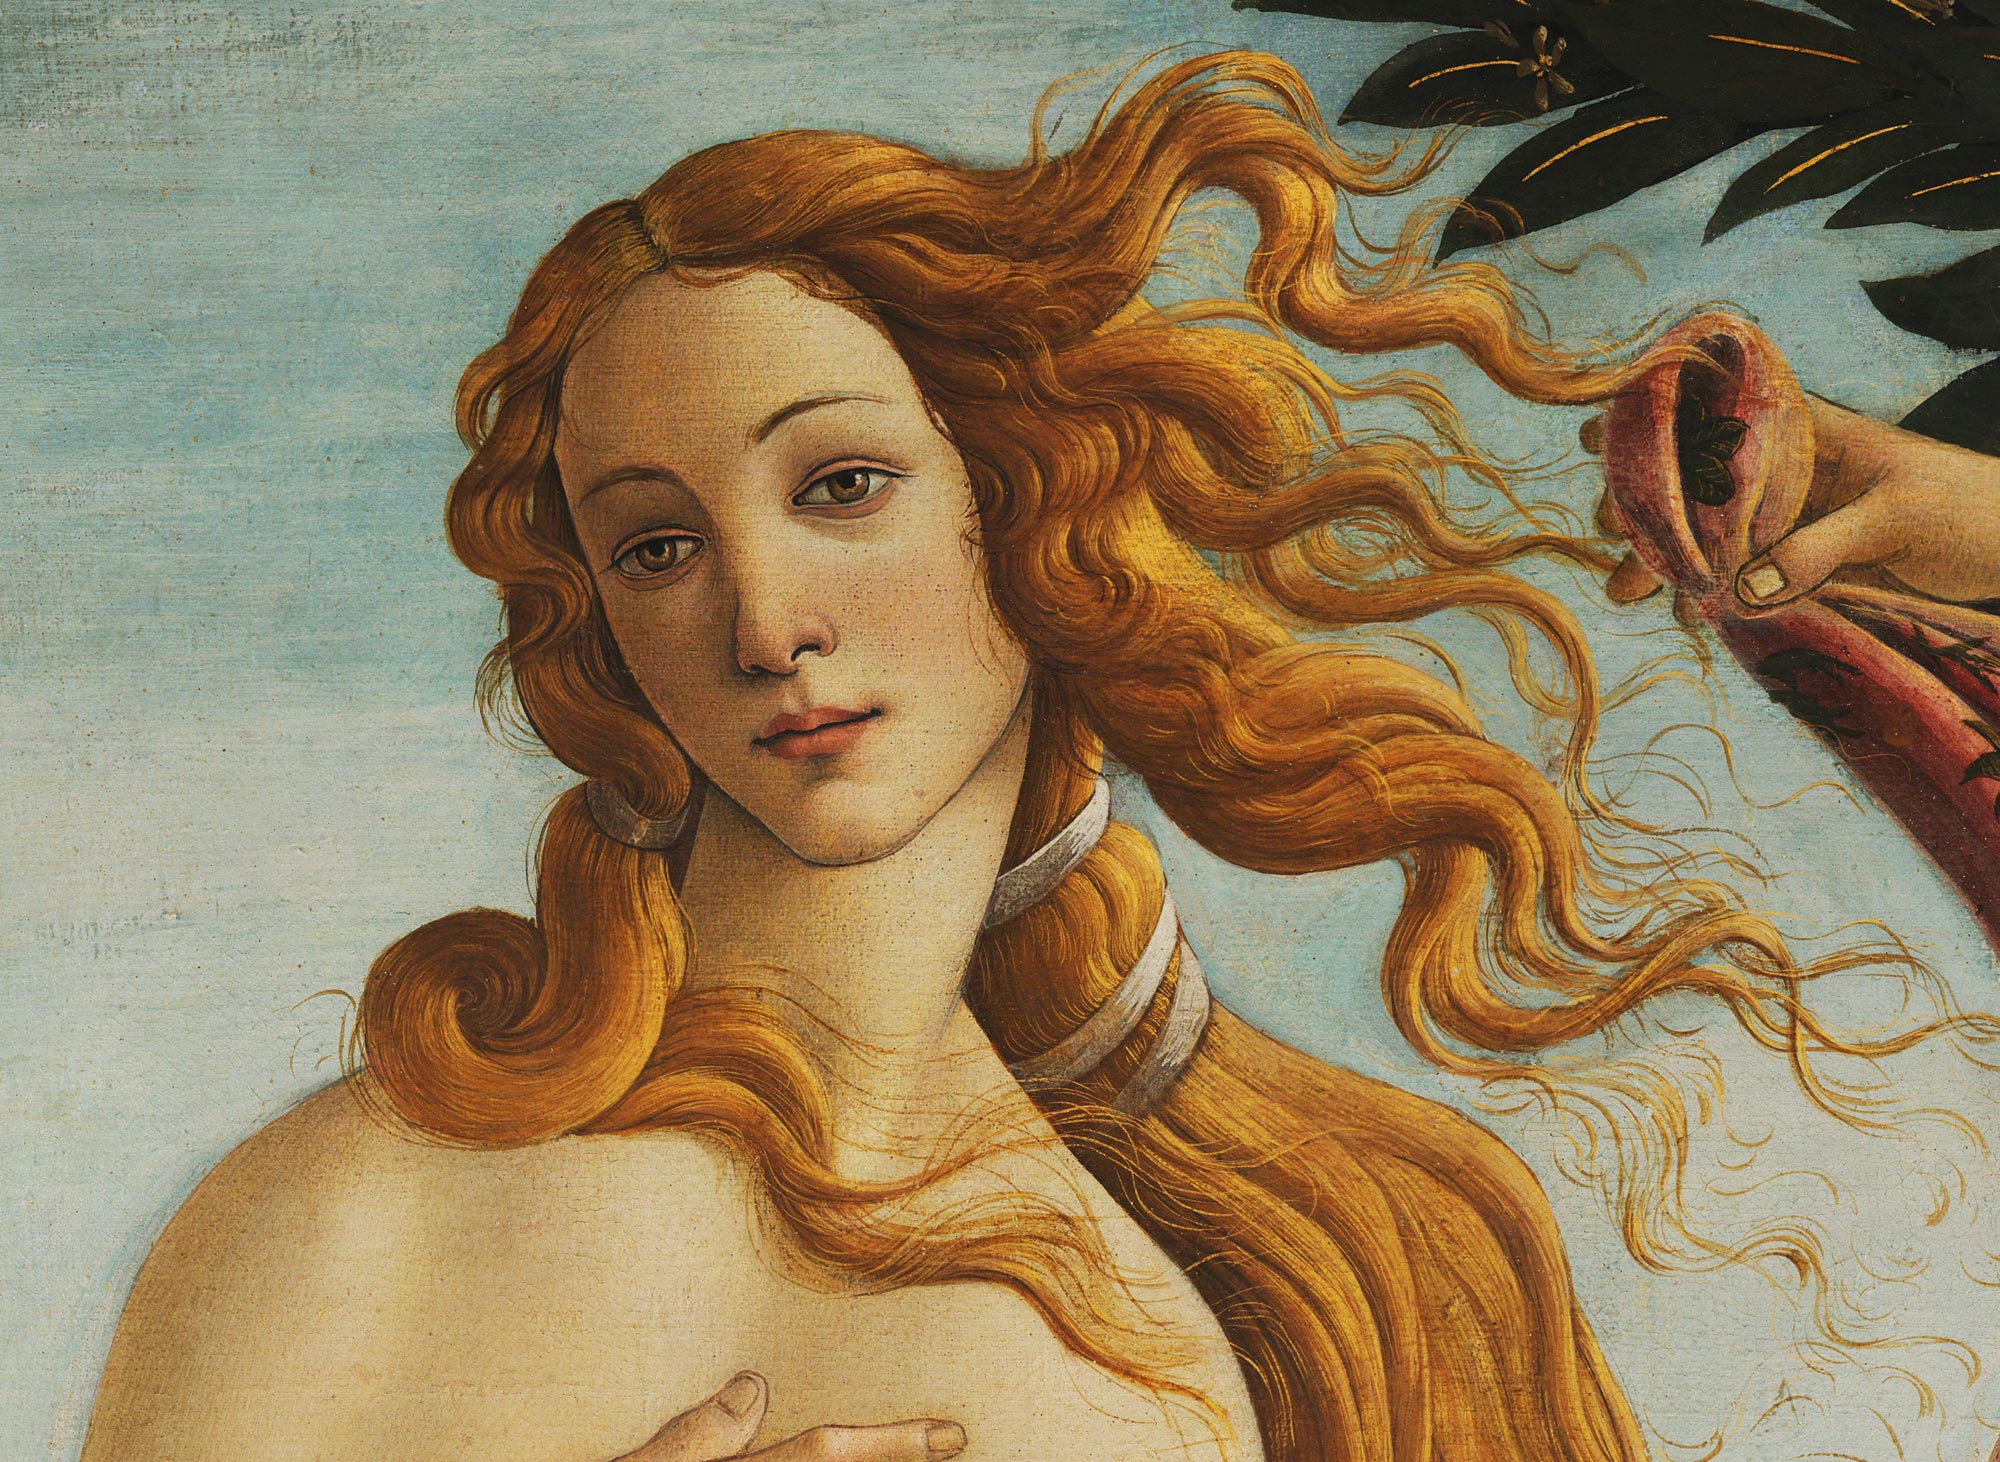 Sandro Botticelli, Birth of Venus, detail of the figure of Venus